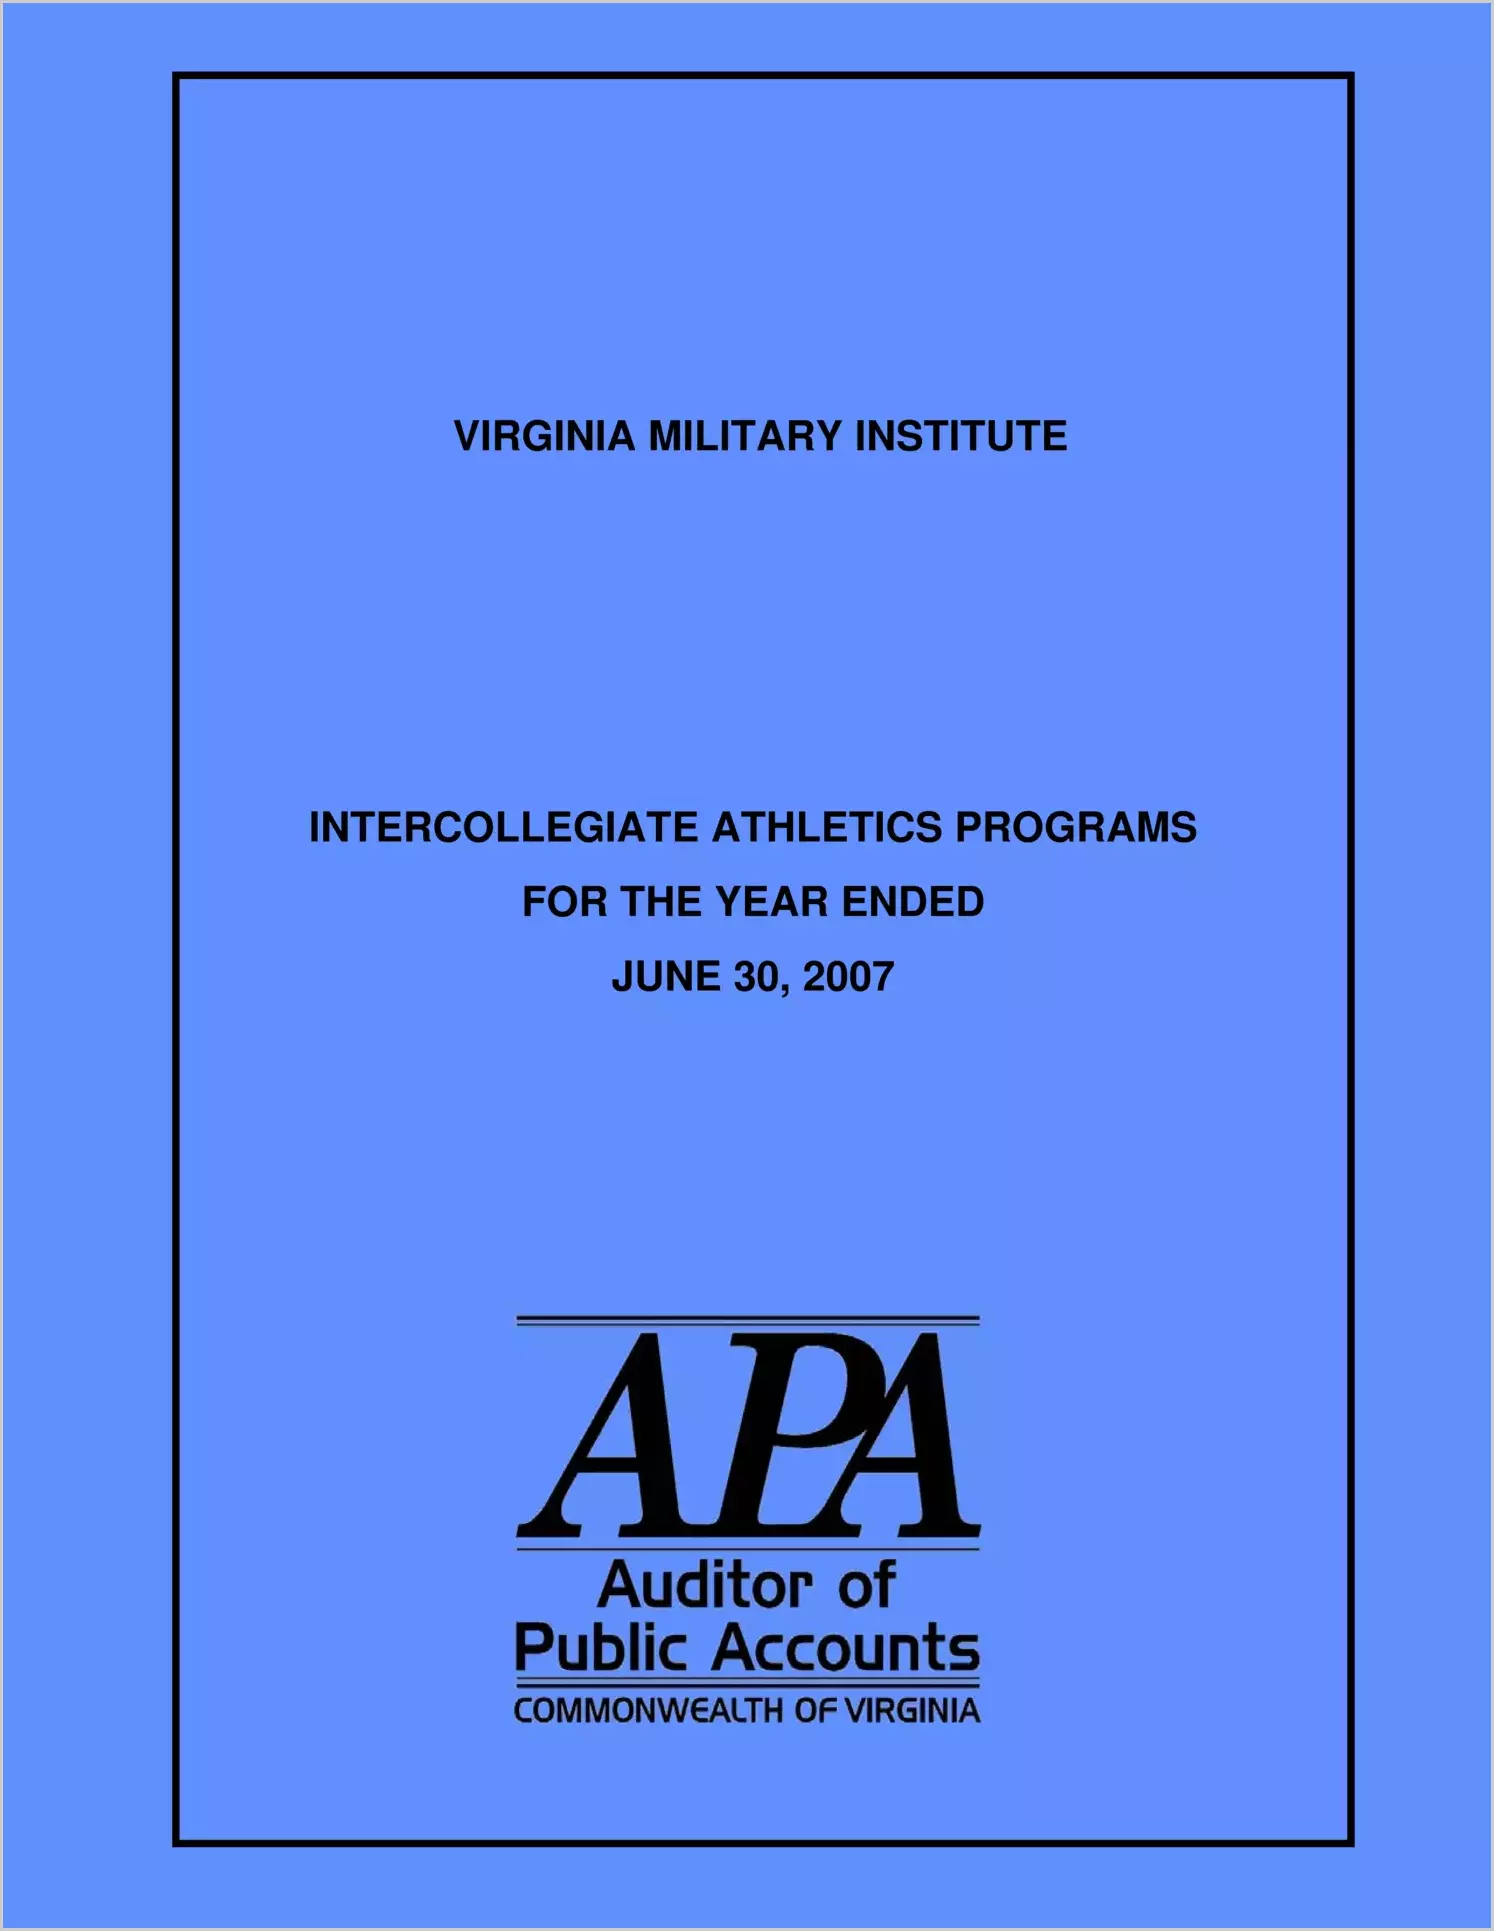 Virginia Military Institute Intercollegiate Athletics Programs for the year ended June 30, 2007